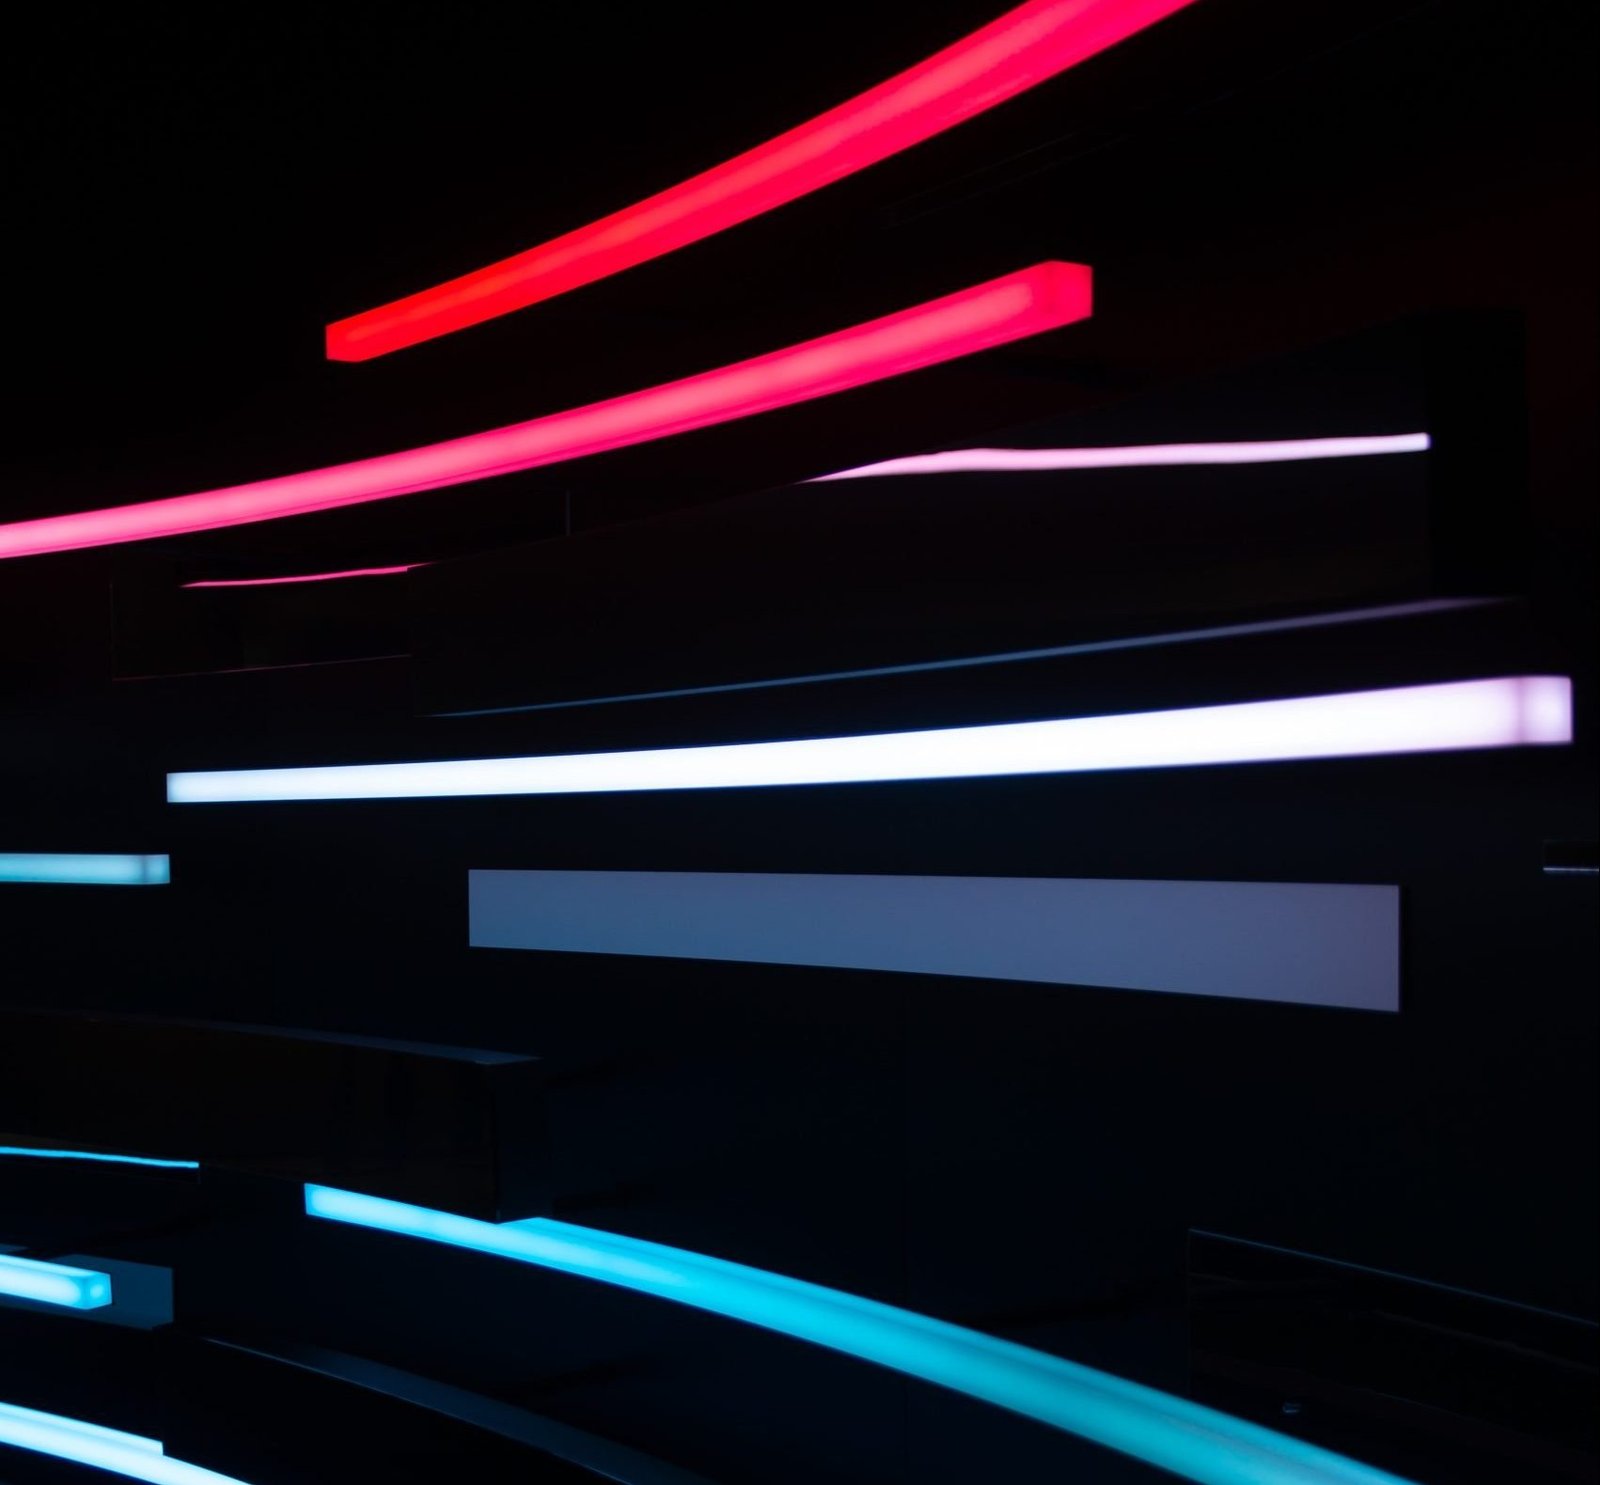 horizontal neon lights in an artistic display